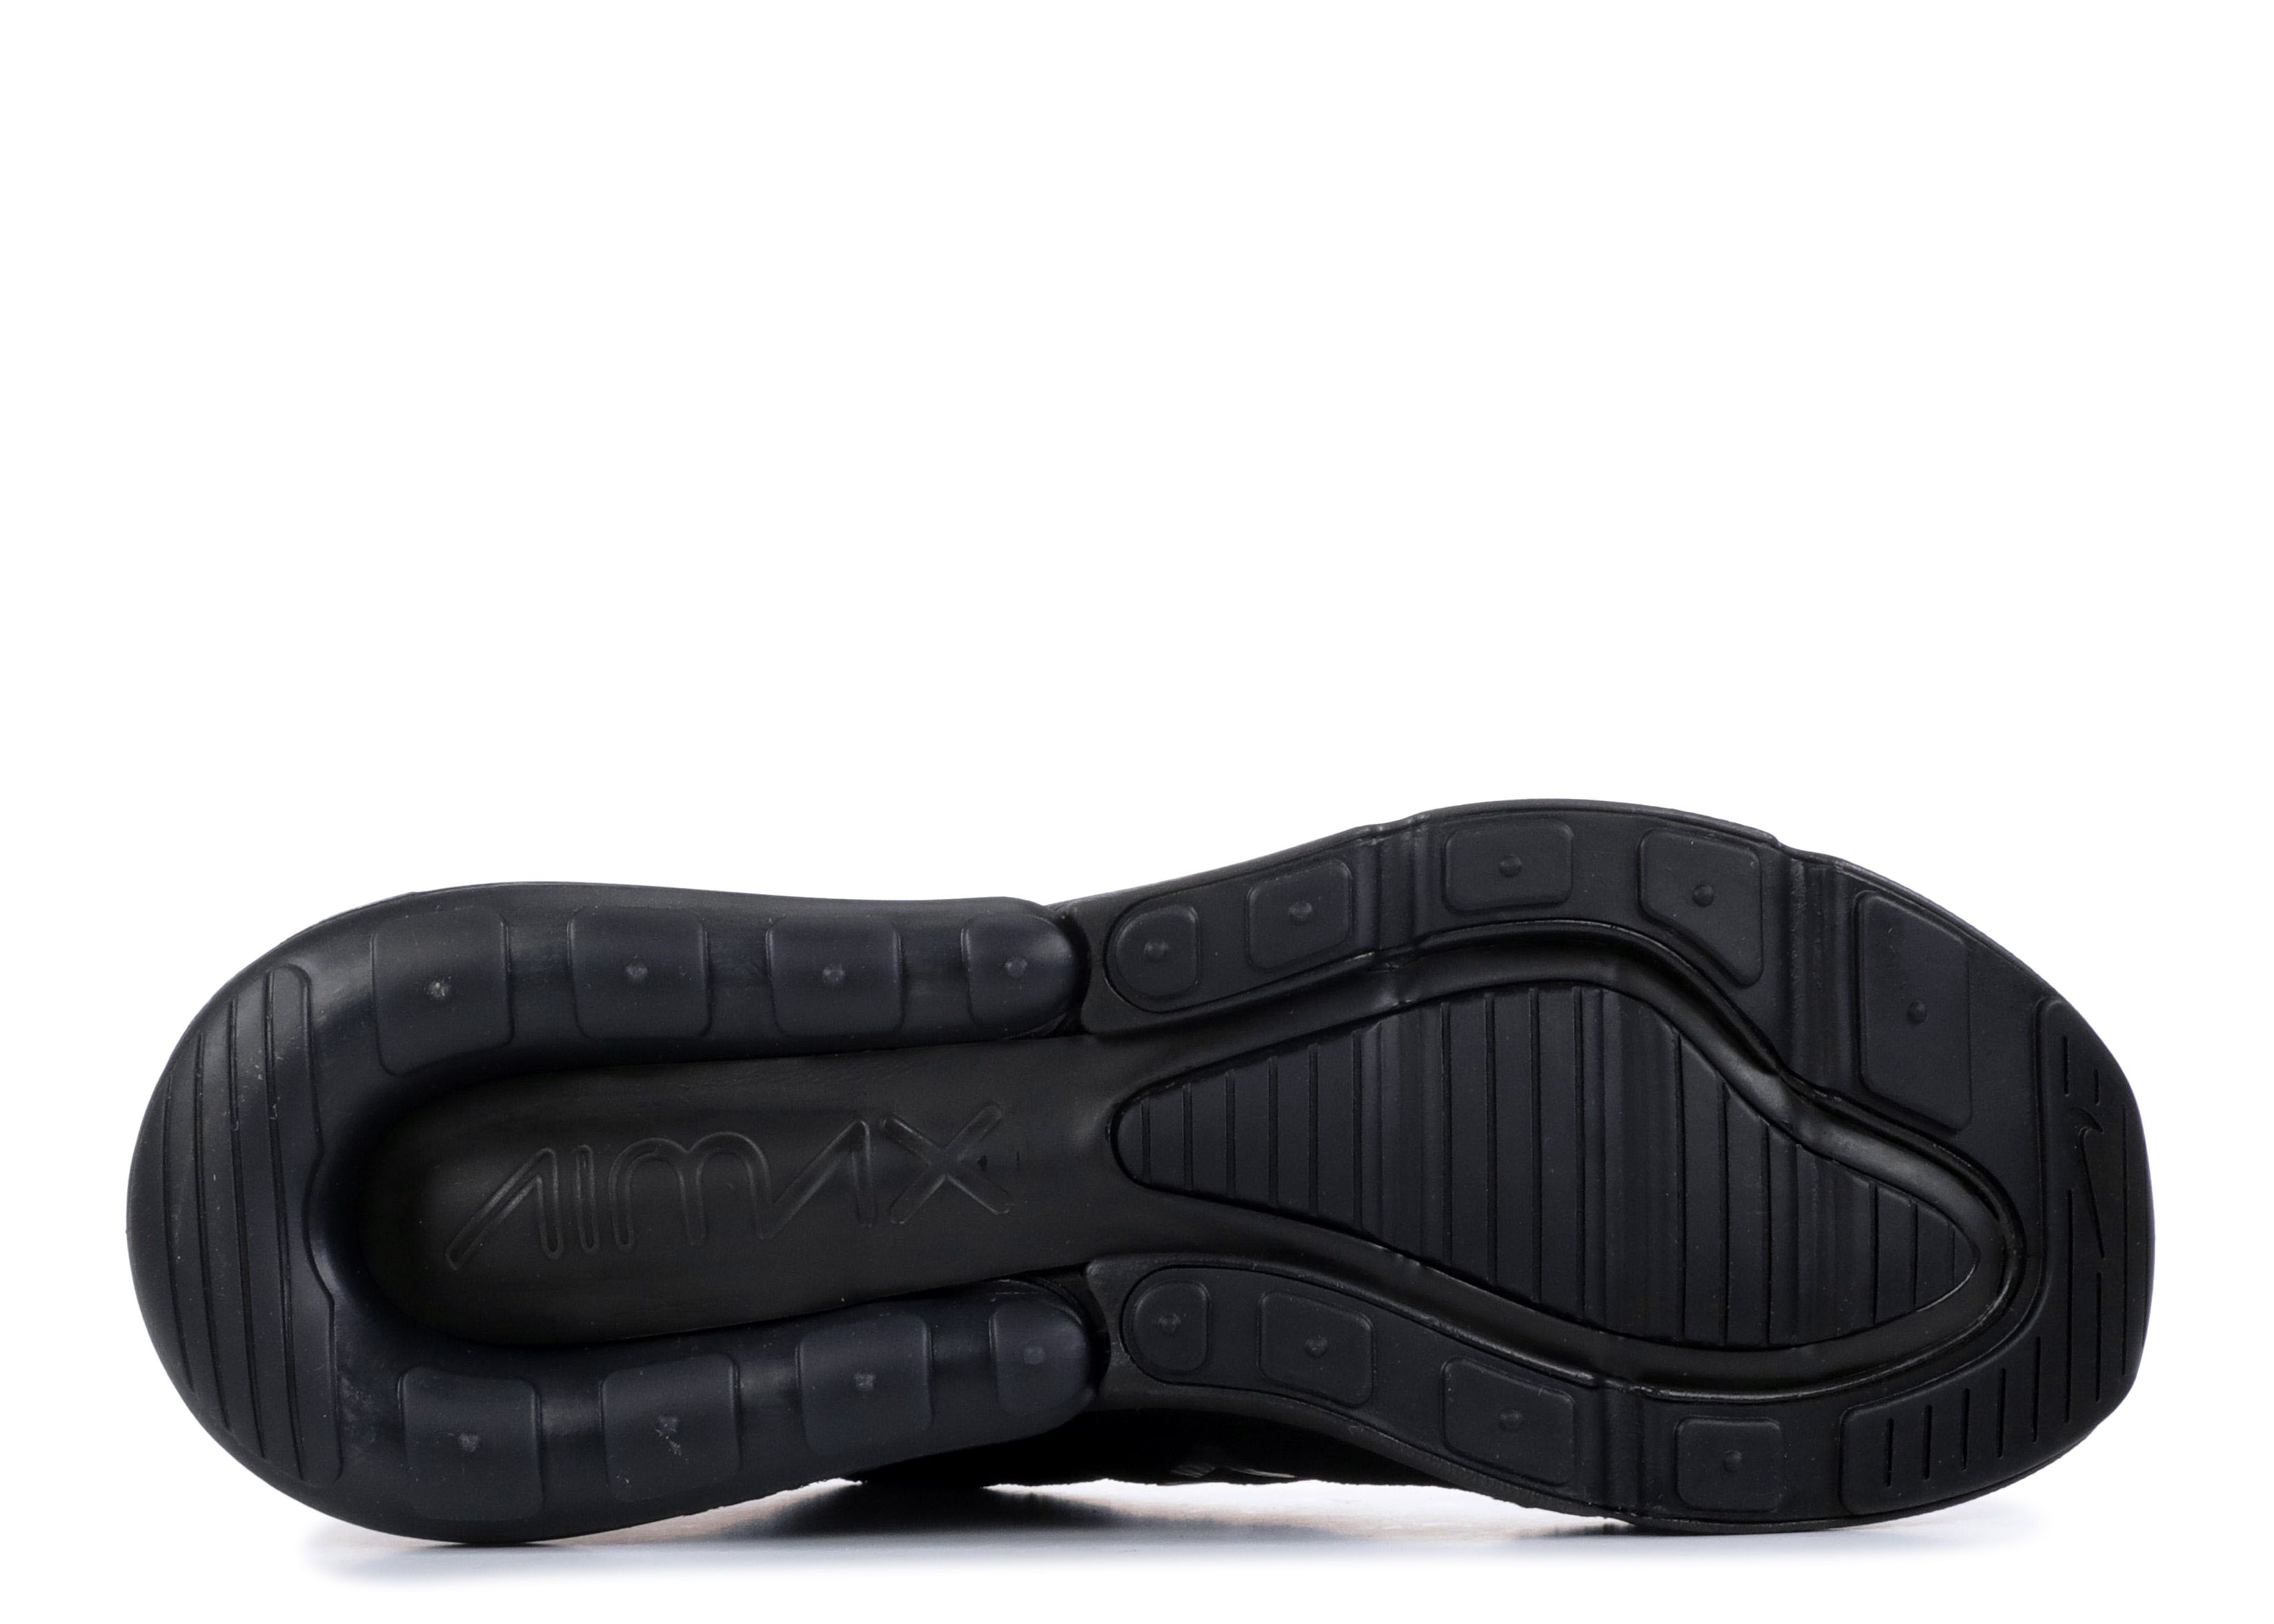 Nike Air Max 270 Flyknit Pure Platinum/Black-Dark Grey - AO1023